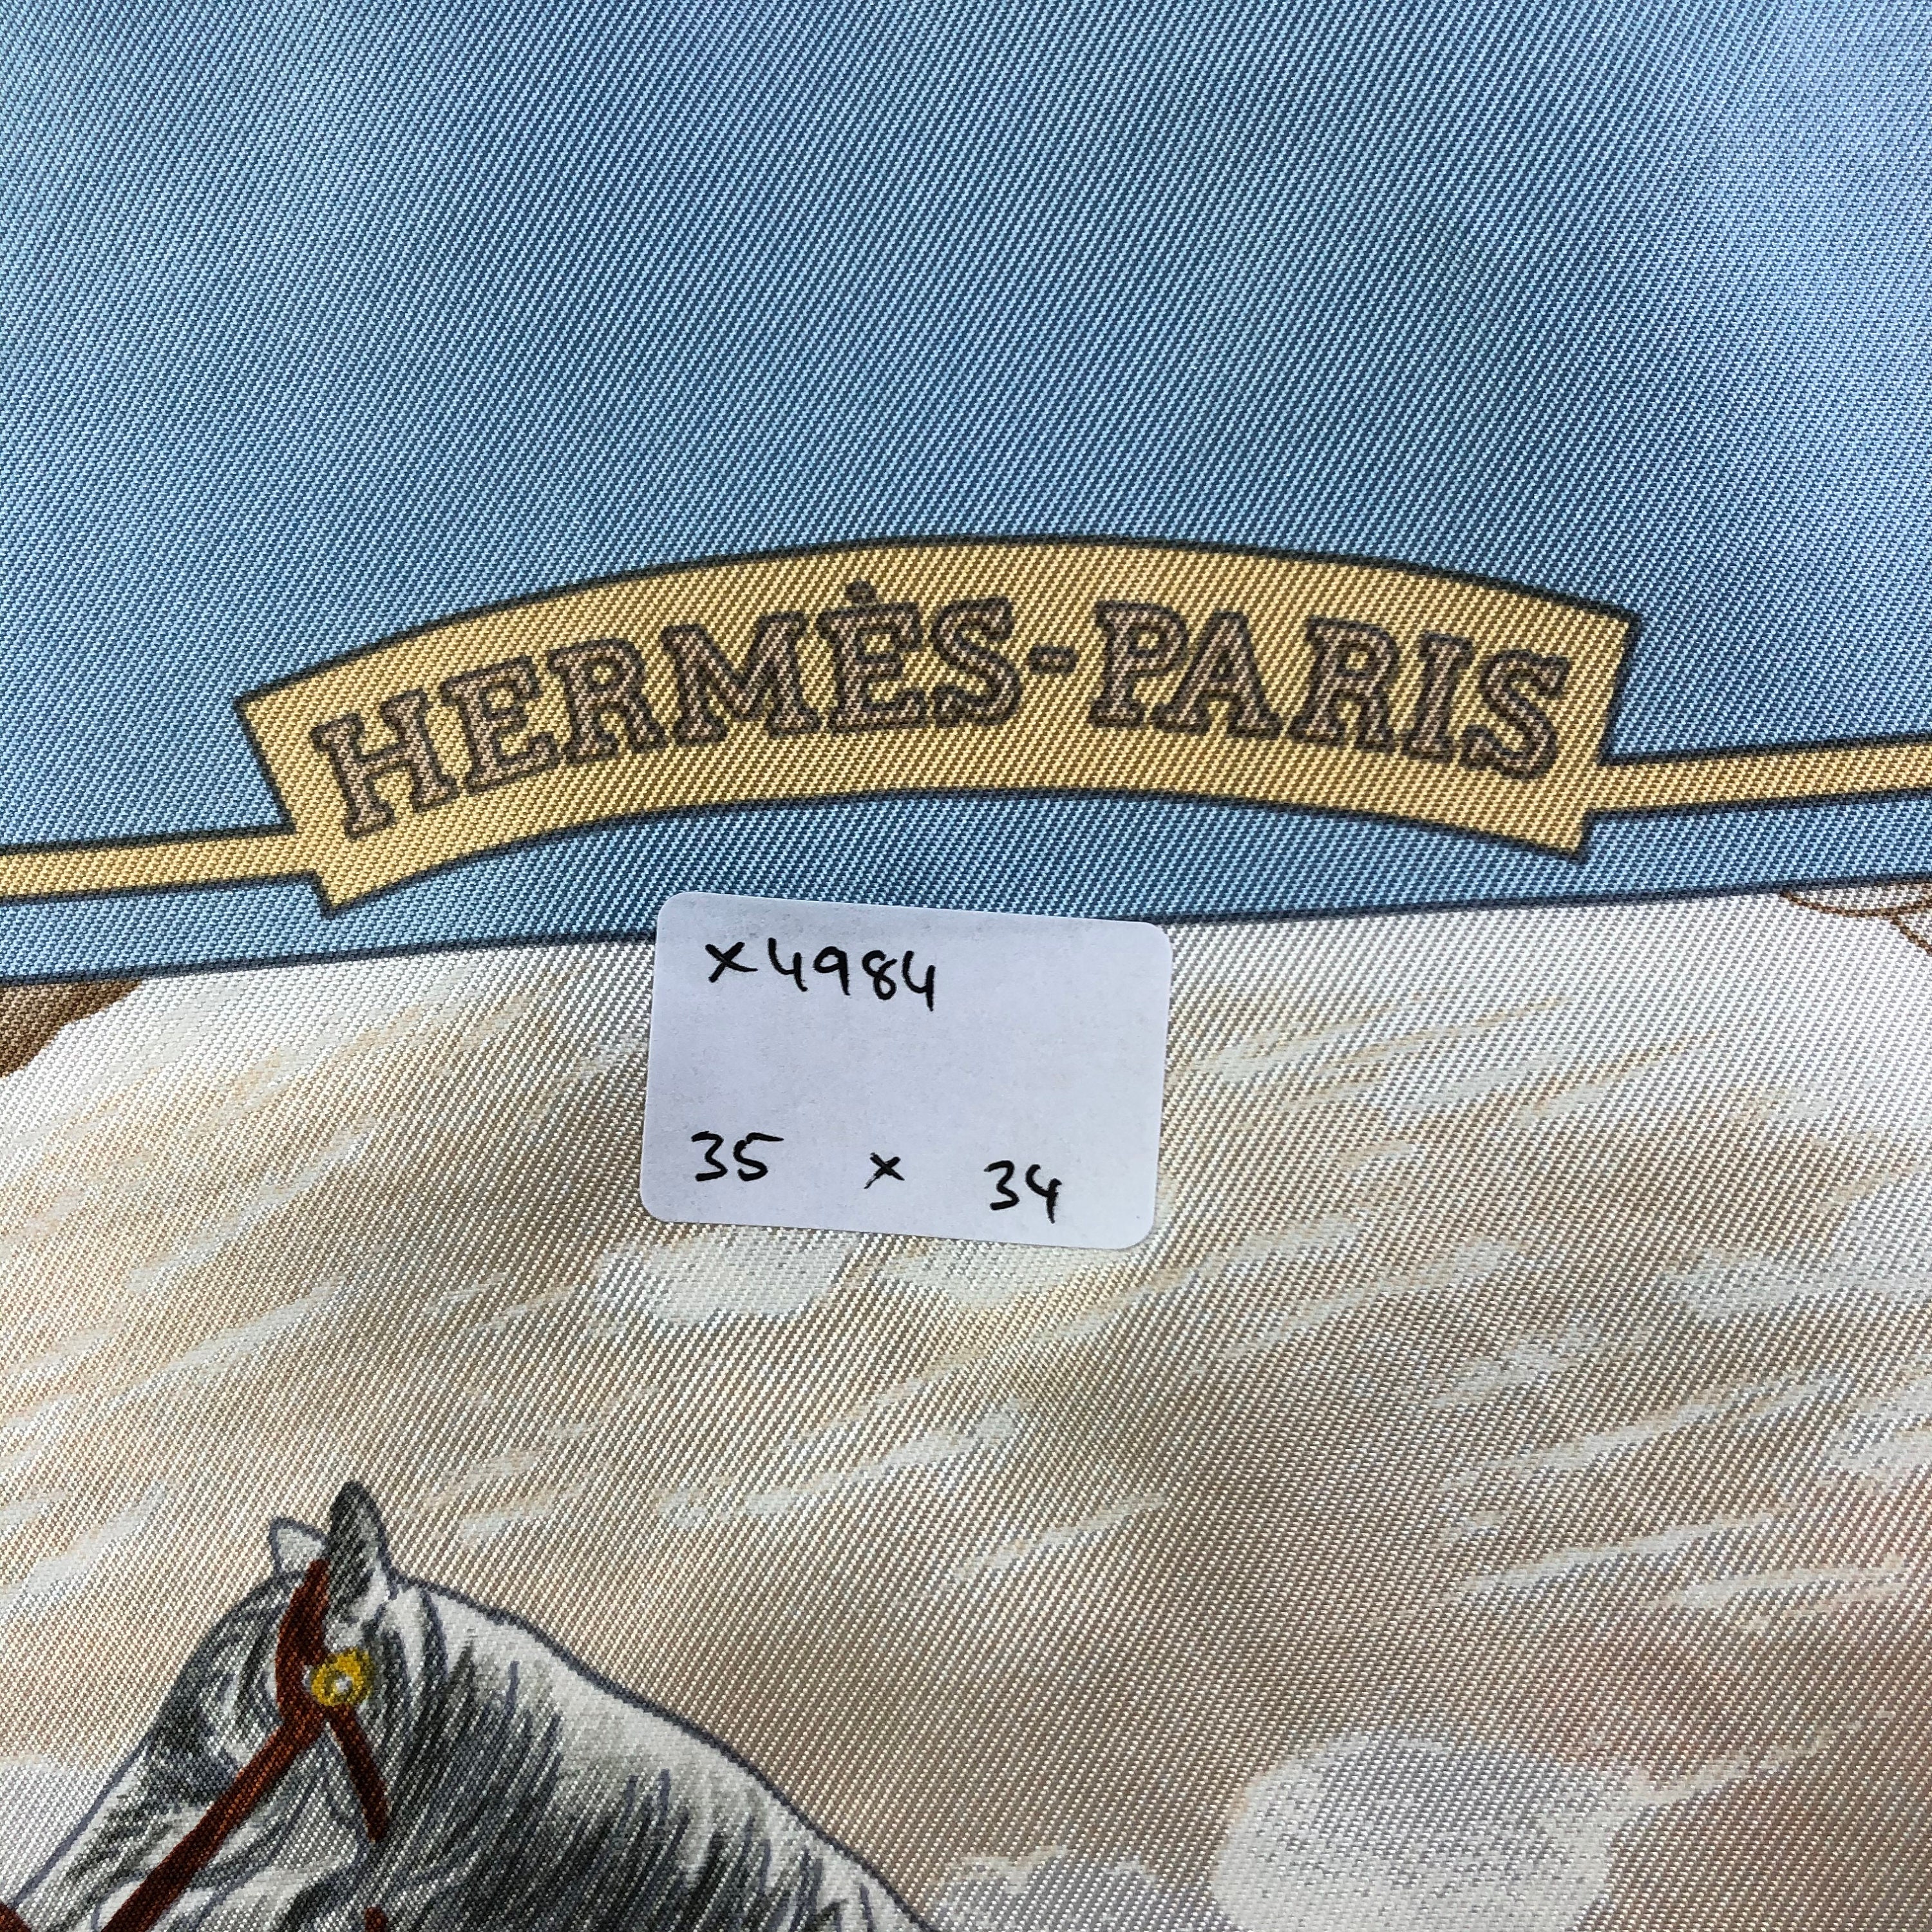 Authentic Vintage Hermes Silk Scarf Auteuil en Mai Mint Unworn with  Original Packaging – The World of Hermes© Scarves